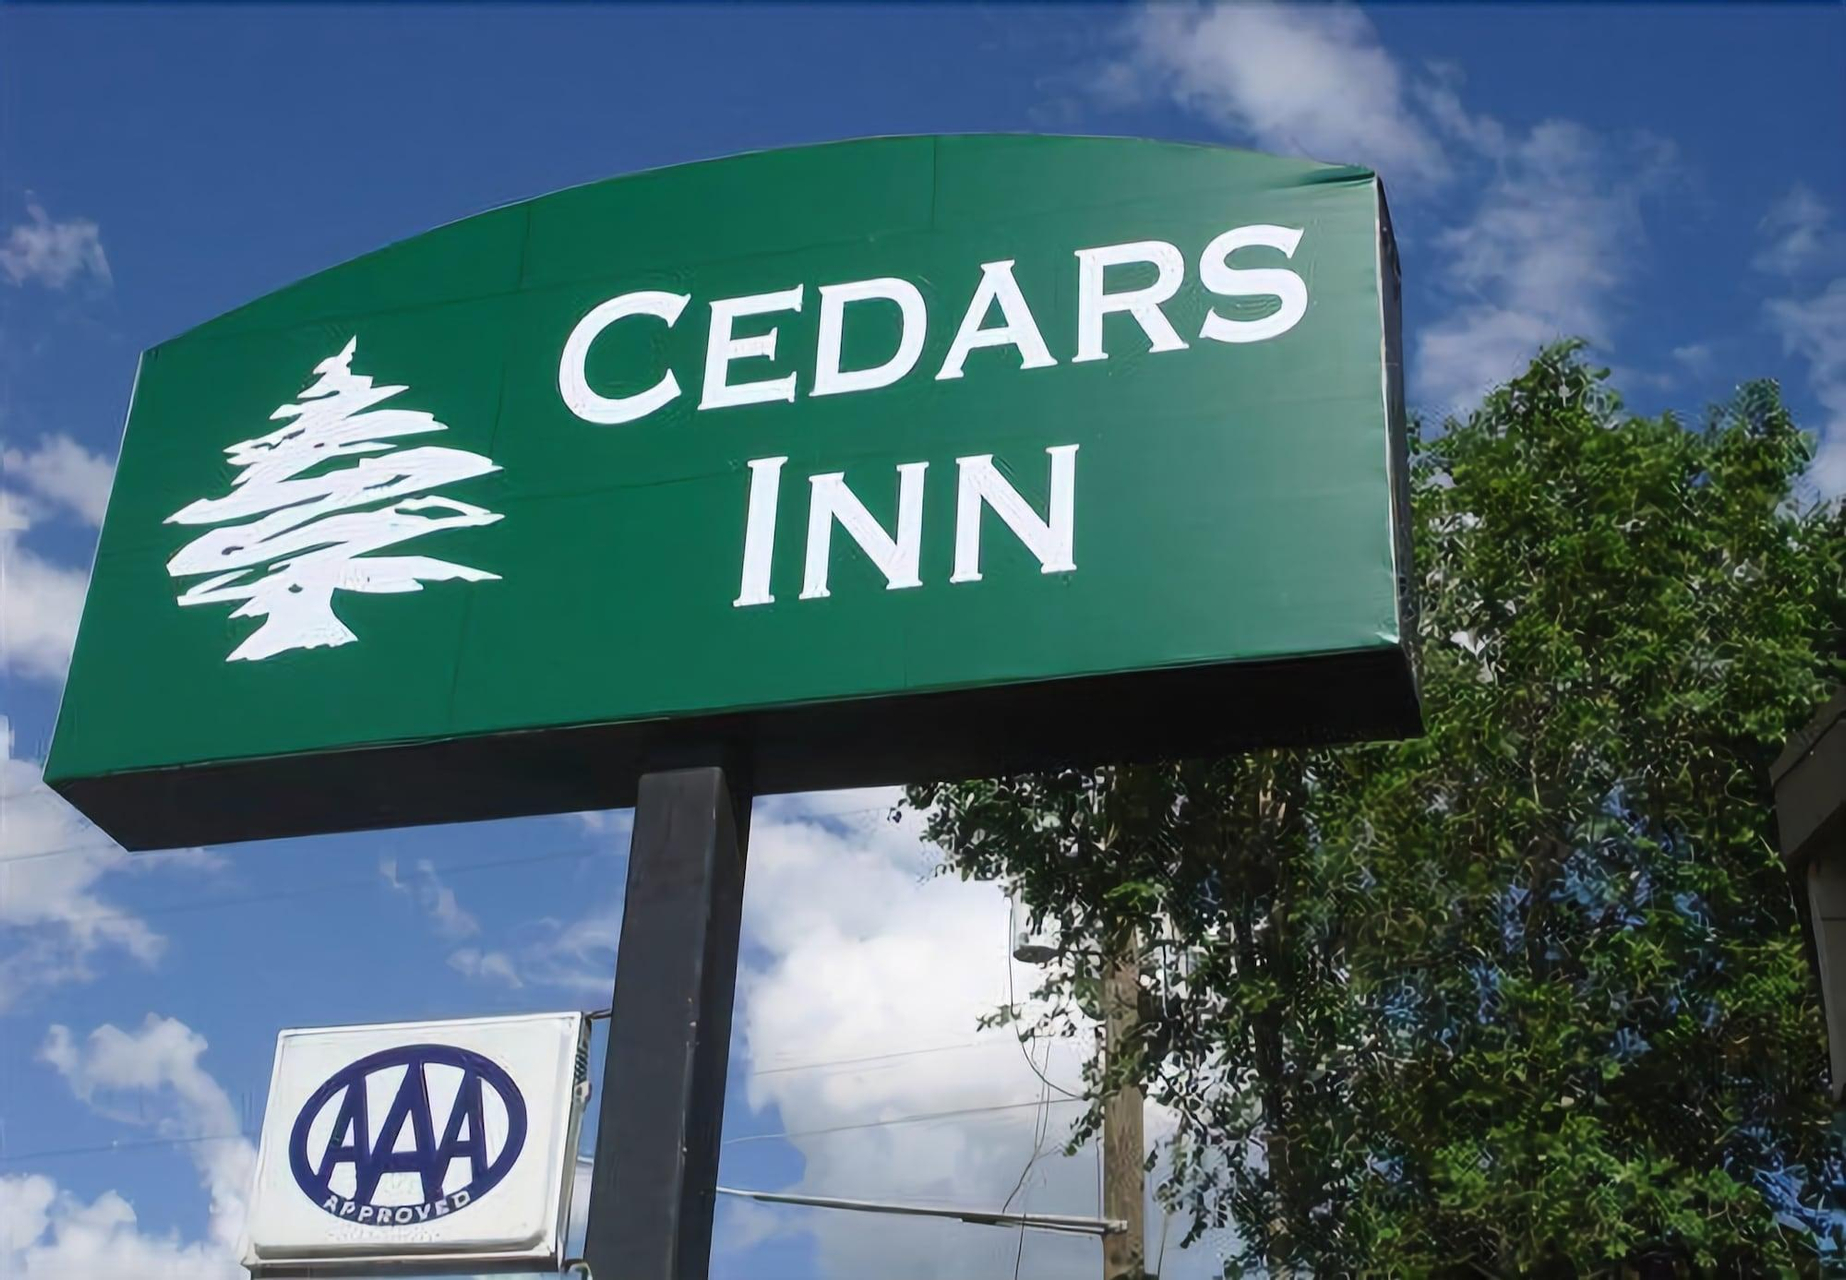 Cedars Inn Lewiston, Nez Perce